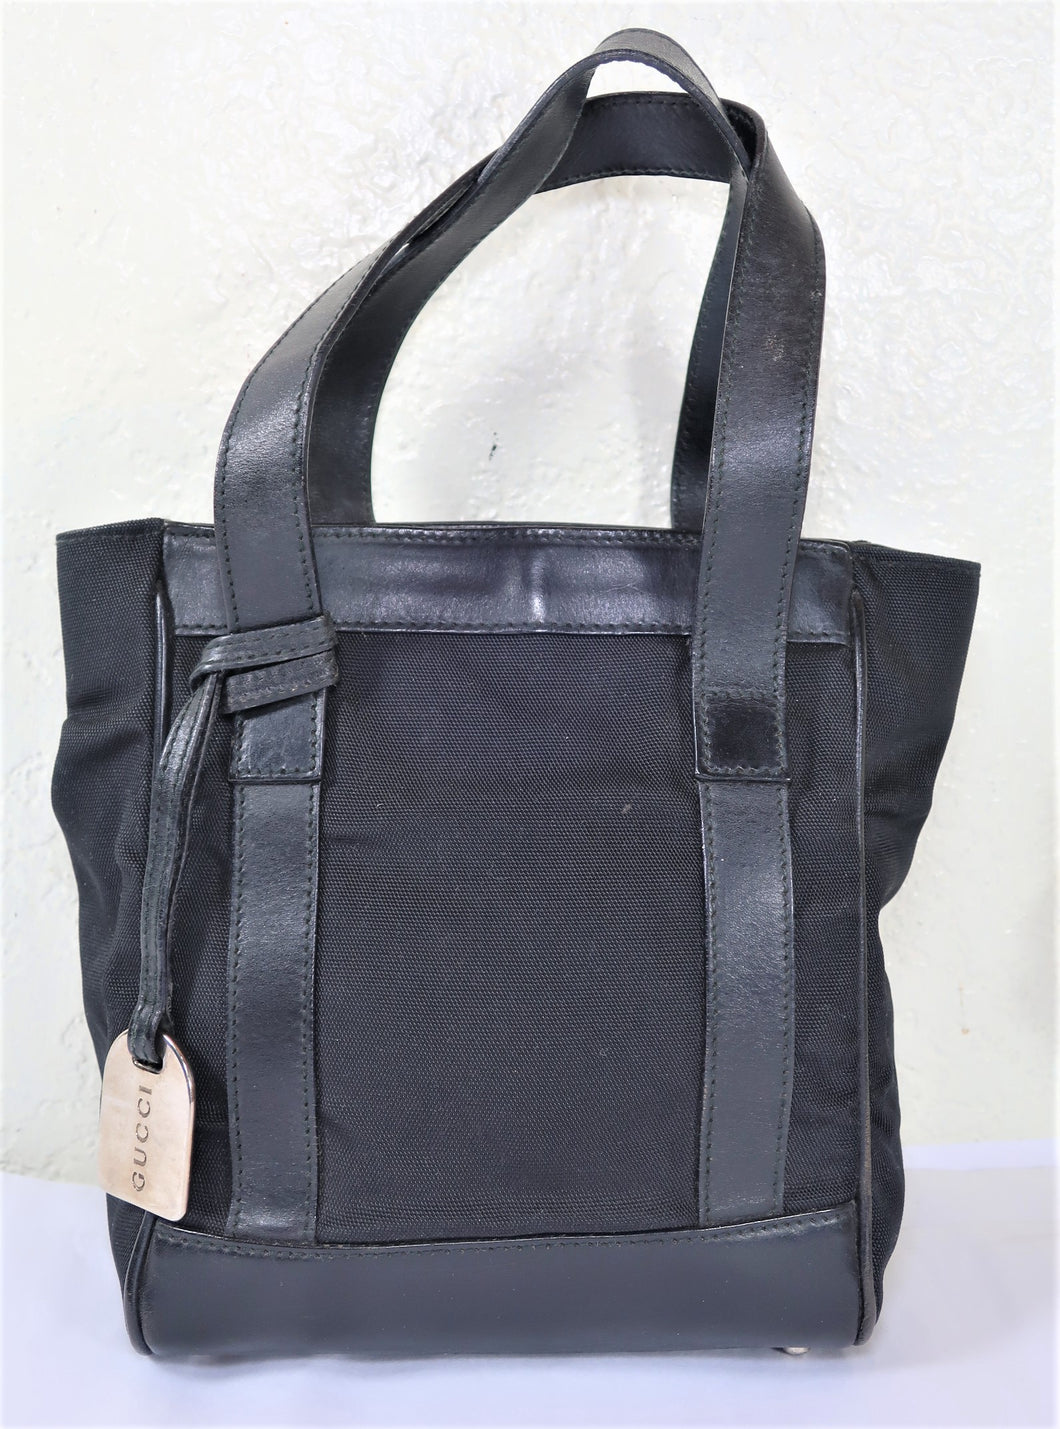 Vintage GUCCI Black Nylon Leather Tiny Small Tote Handbag Hand Shoulder Bag Italy